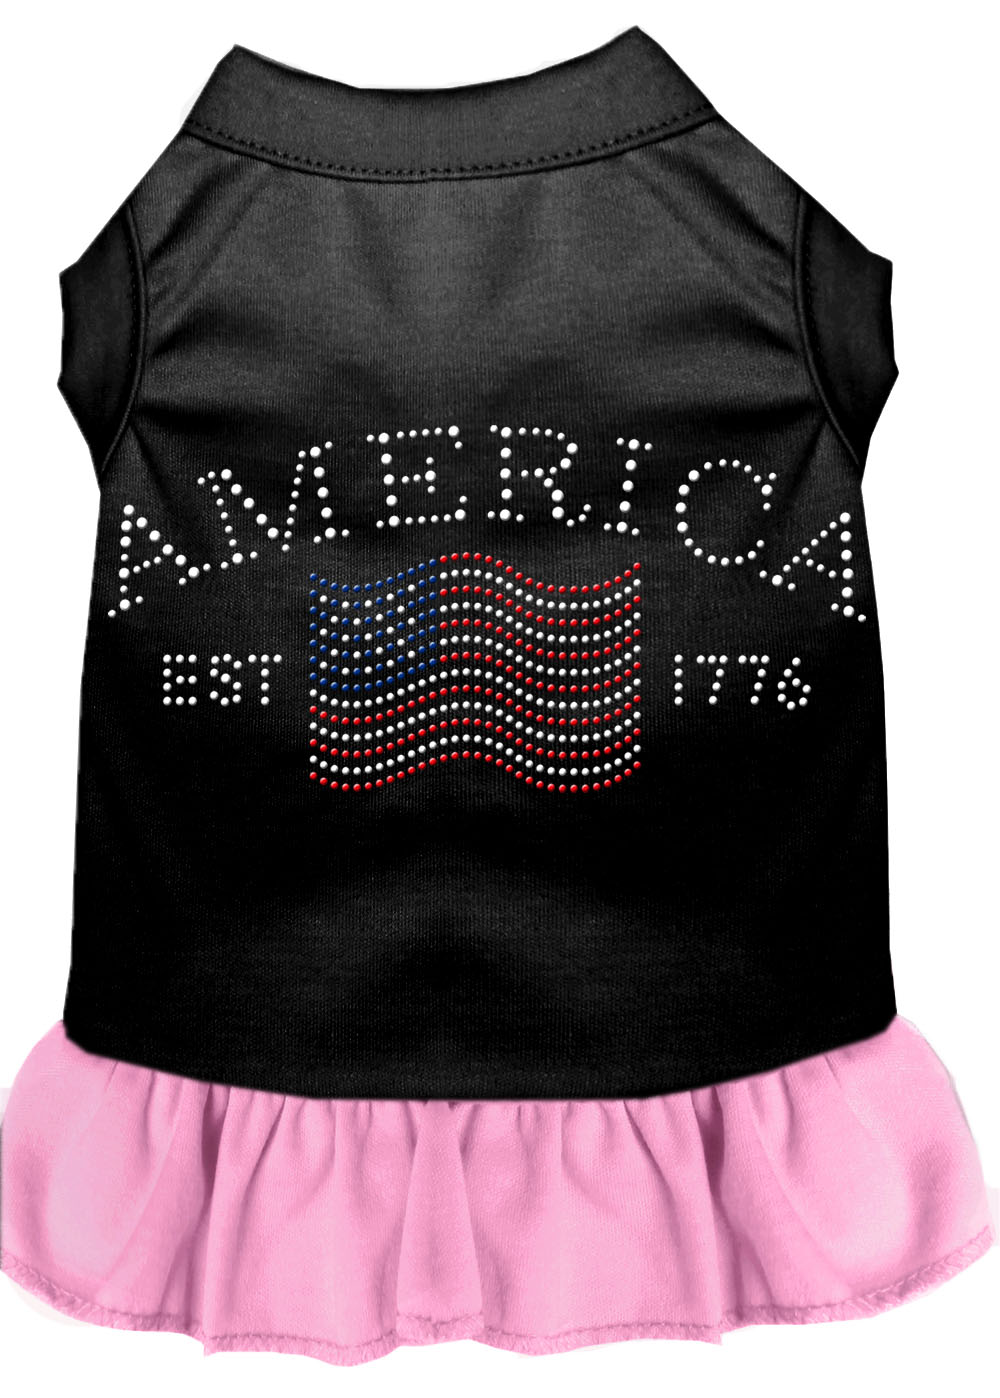 Classic America Rhinestone Dress Black with Light Pink XL